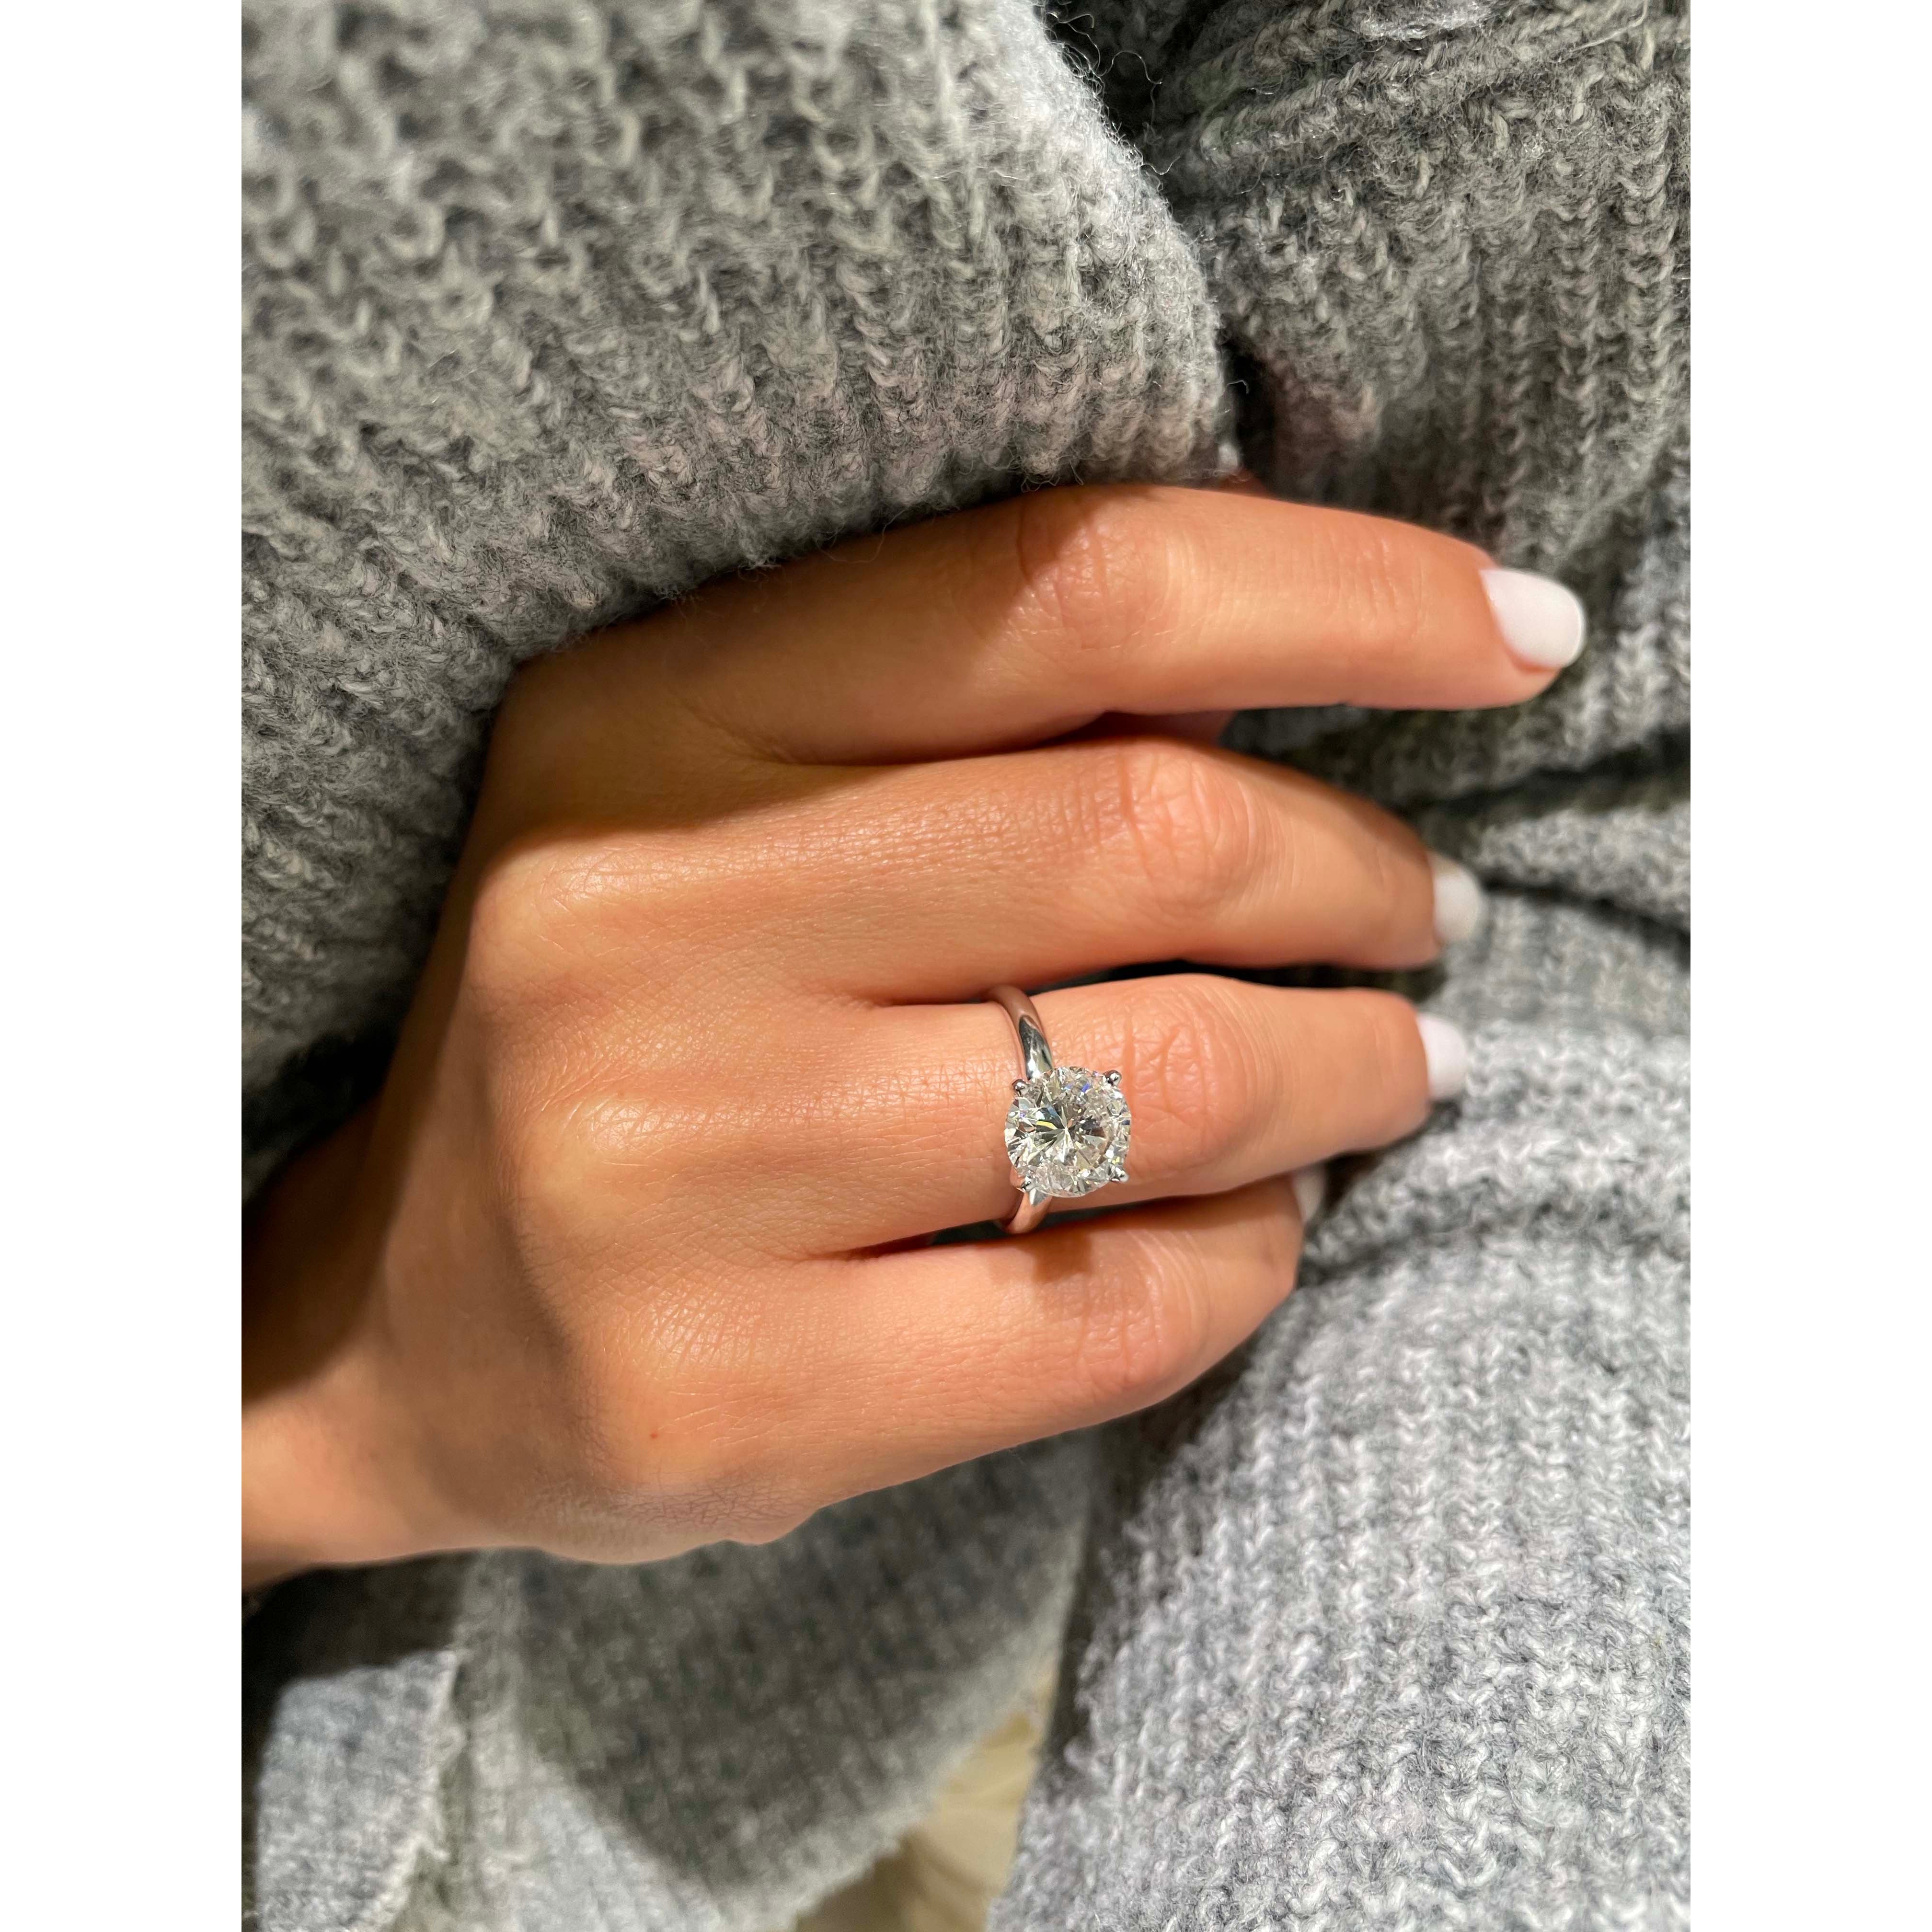 Jessica Diamond Engagement Ring   (3 Carat) -14K White Gold